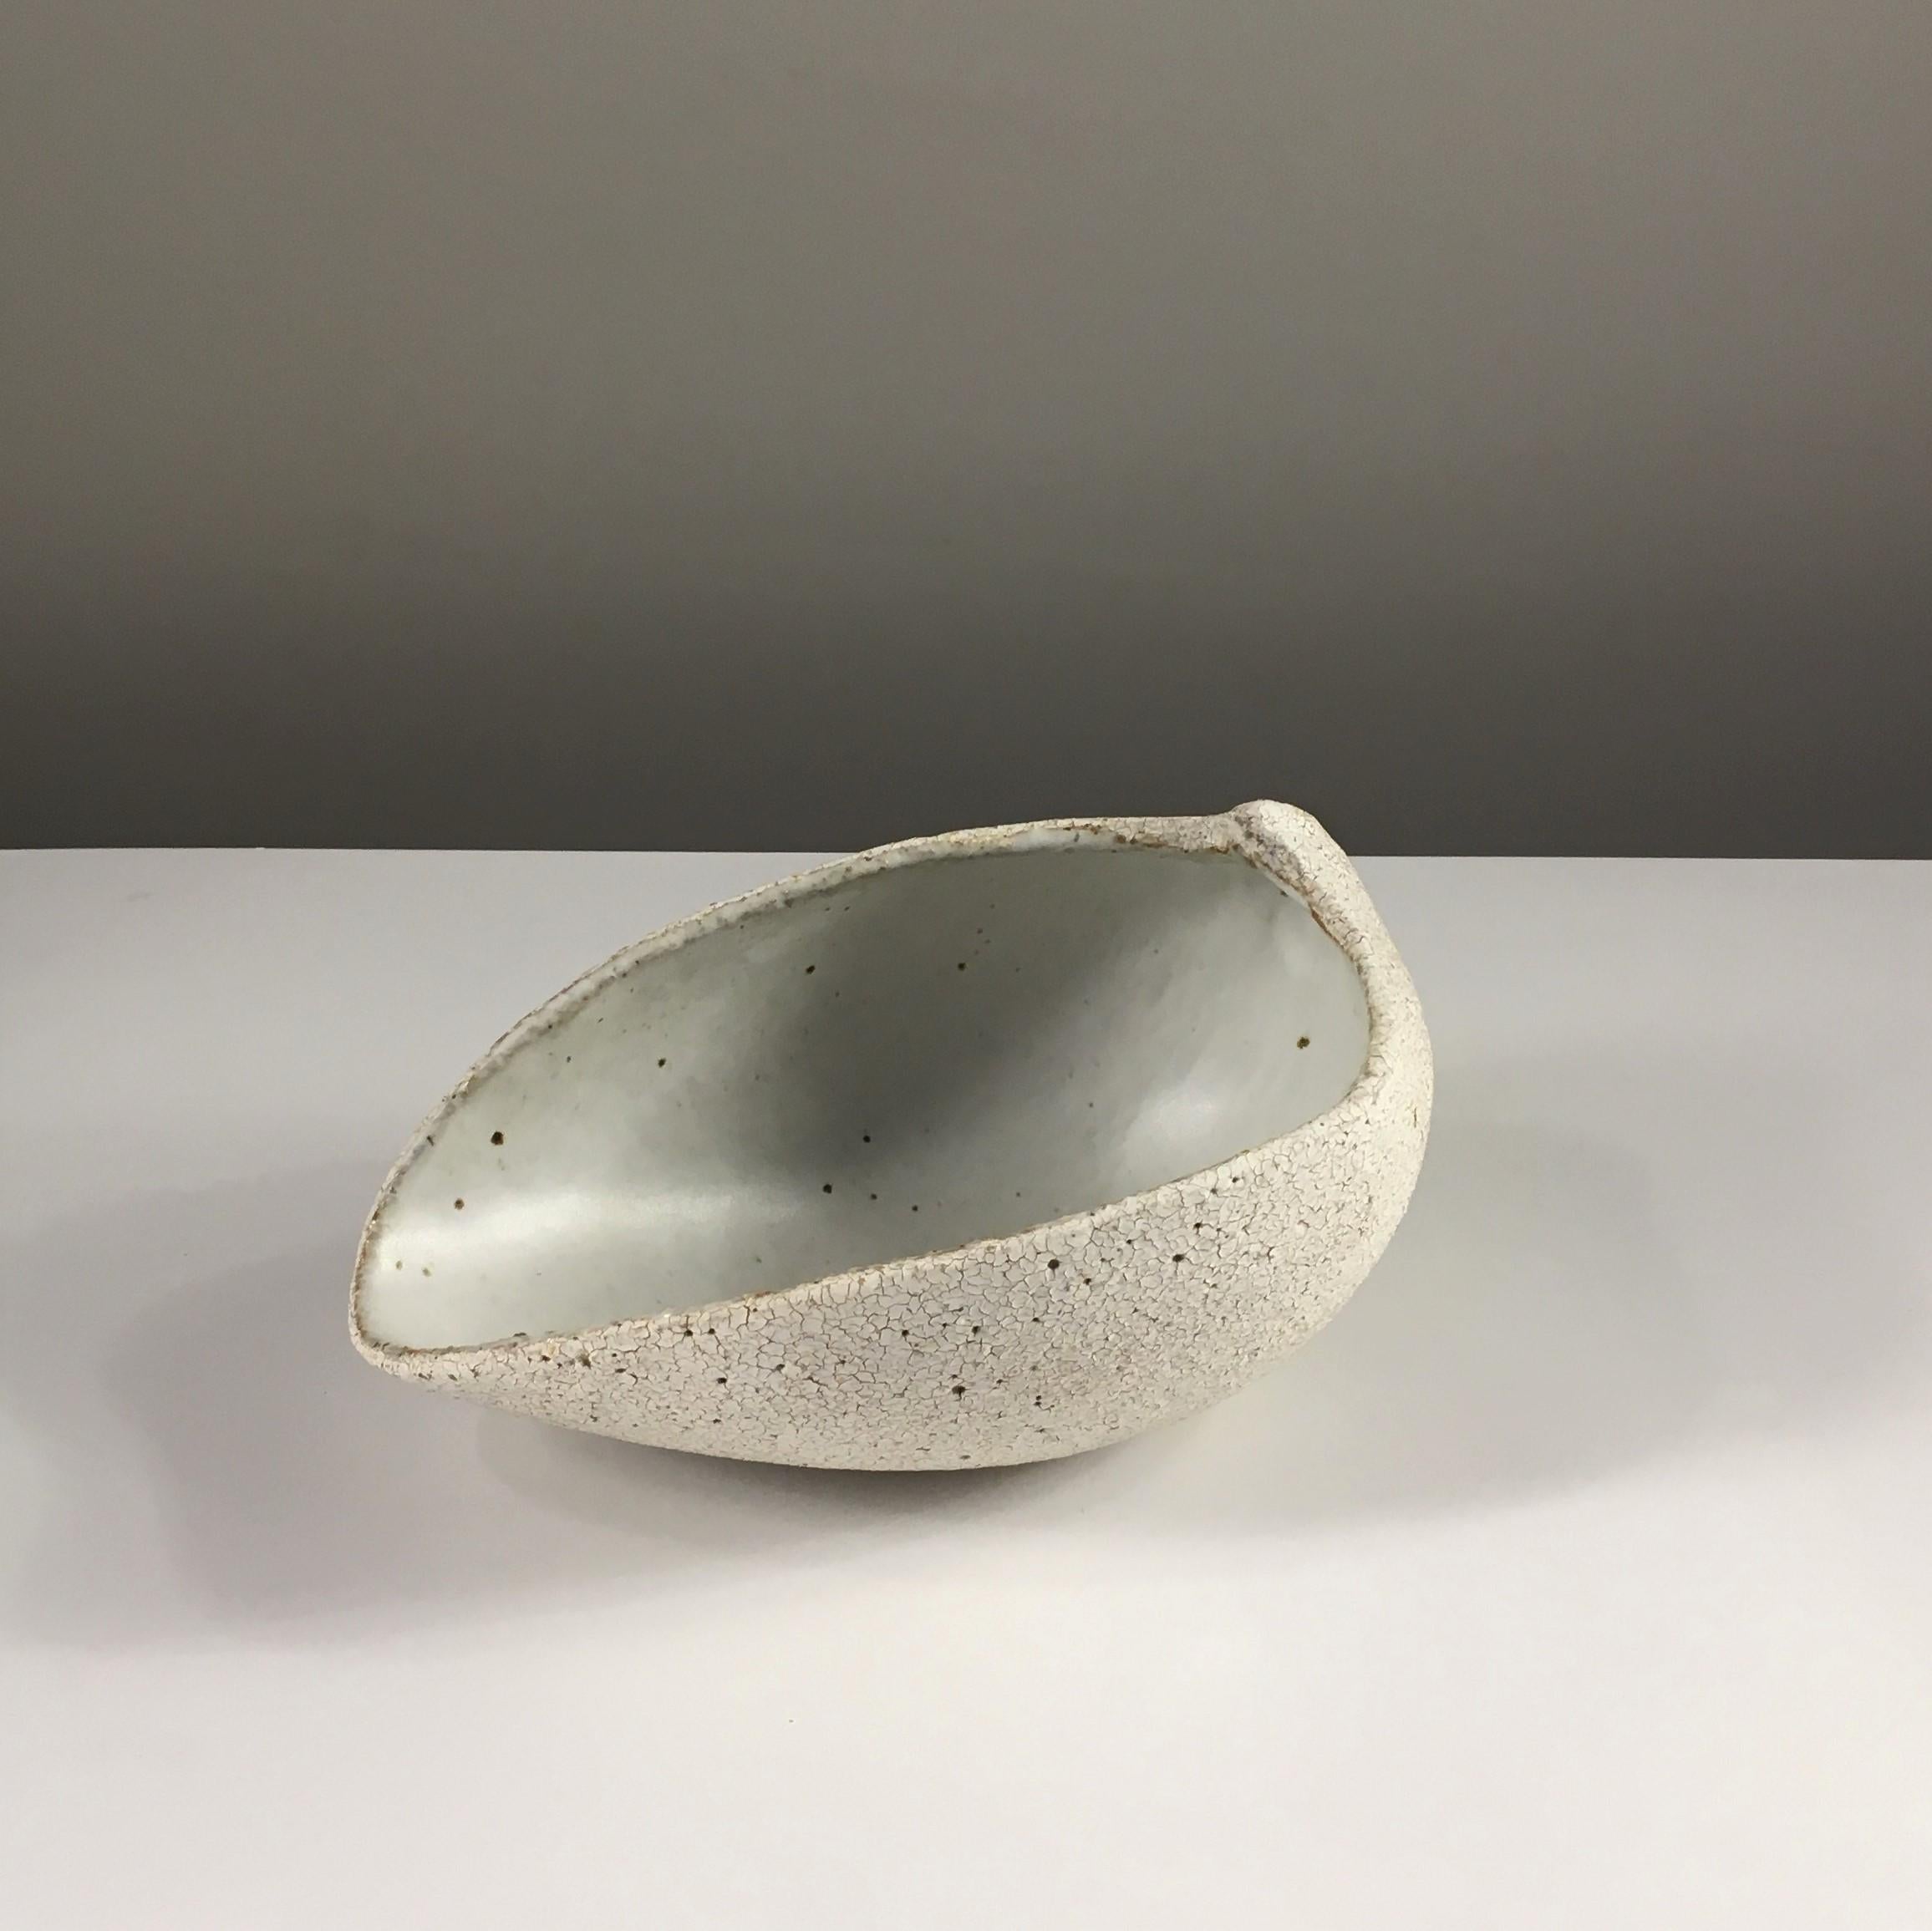 Shallow Ceramic Bowl with Inner Light Grey Glaze by Yumiko Kuga. Dimensions: W 7.5